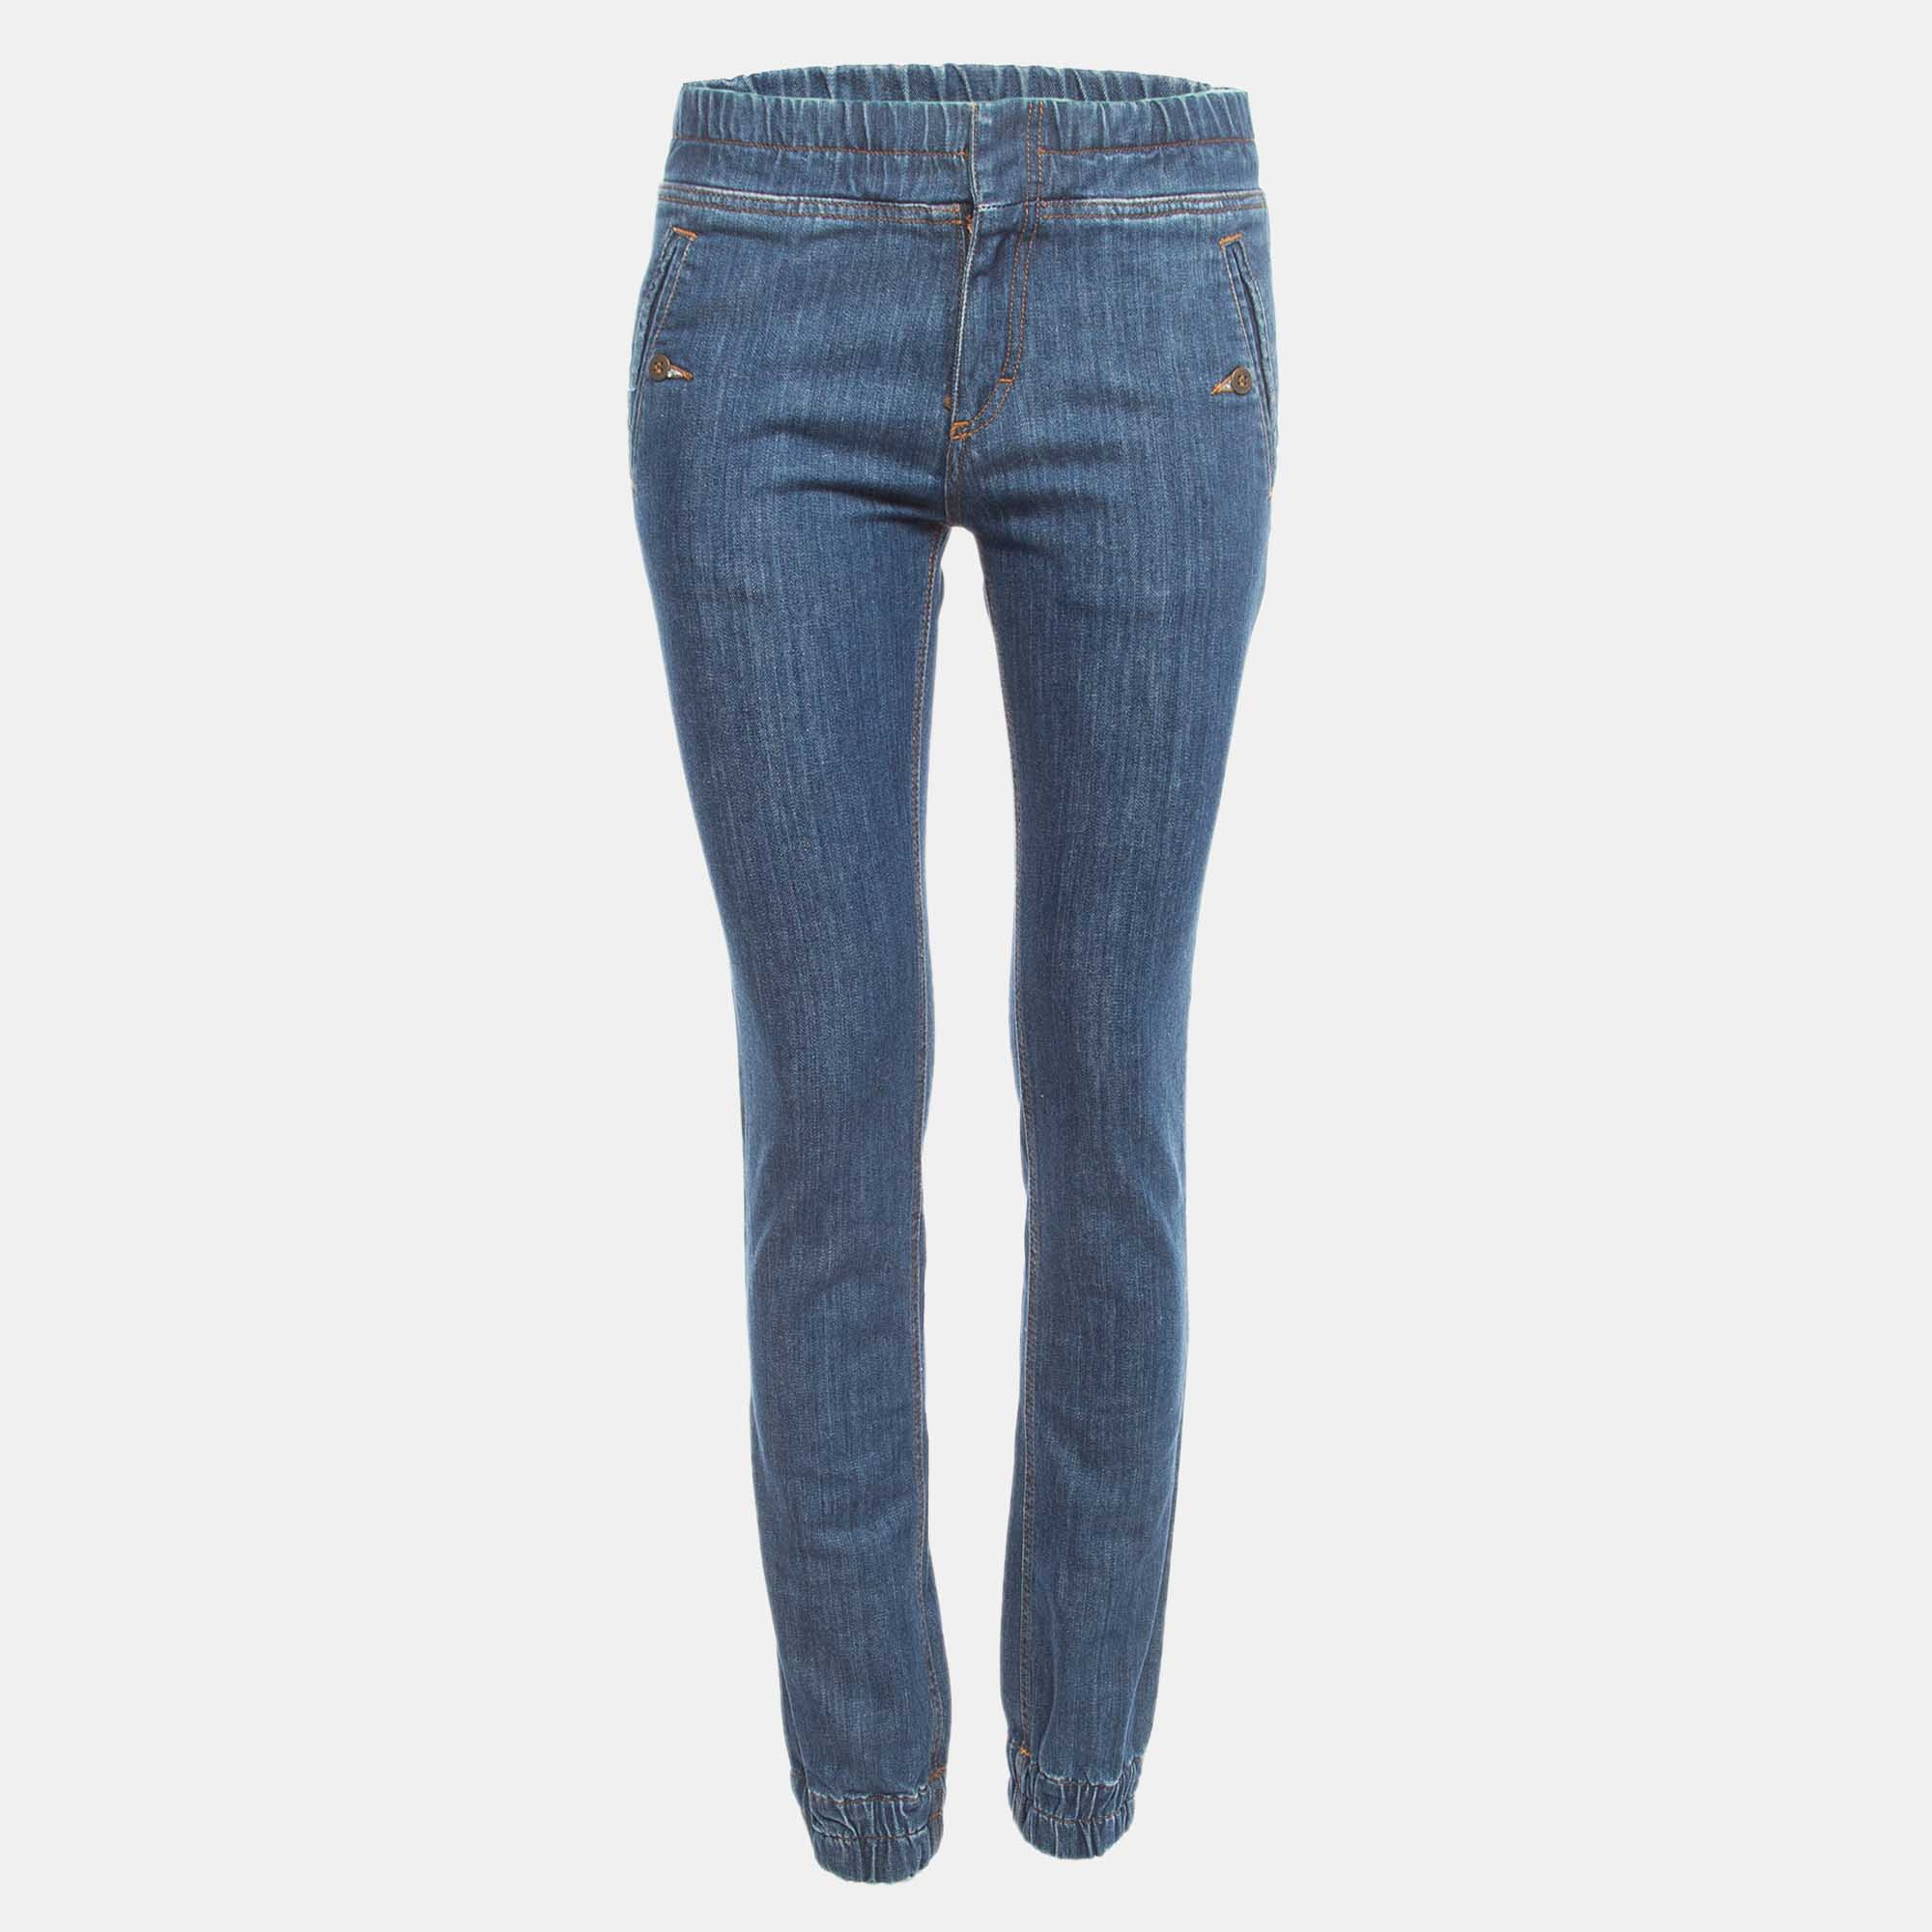 Chloe blue denim elastic waist jeans s waist 28"